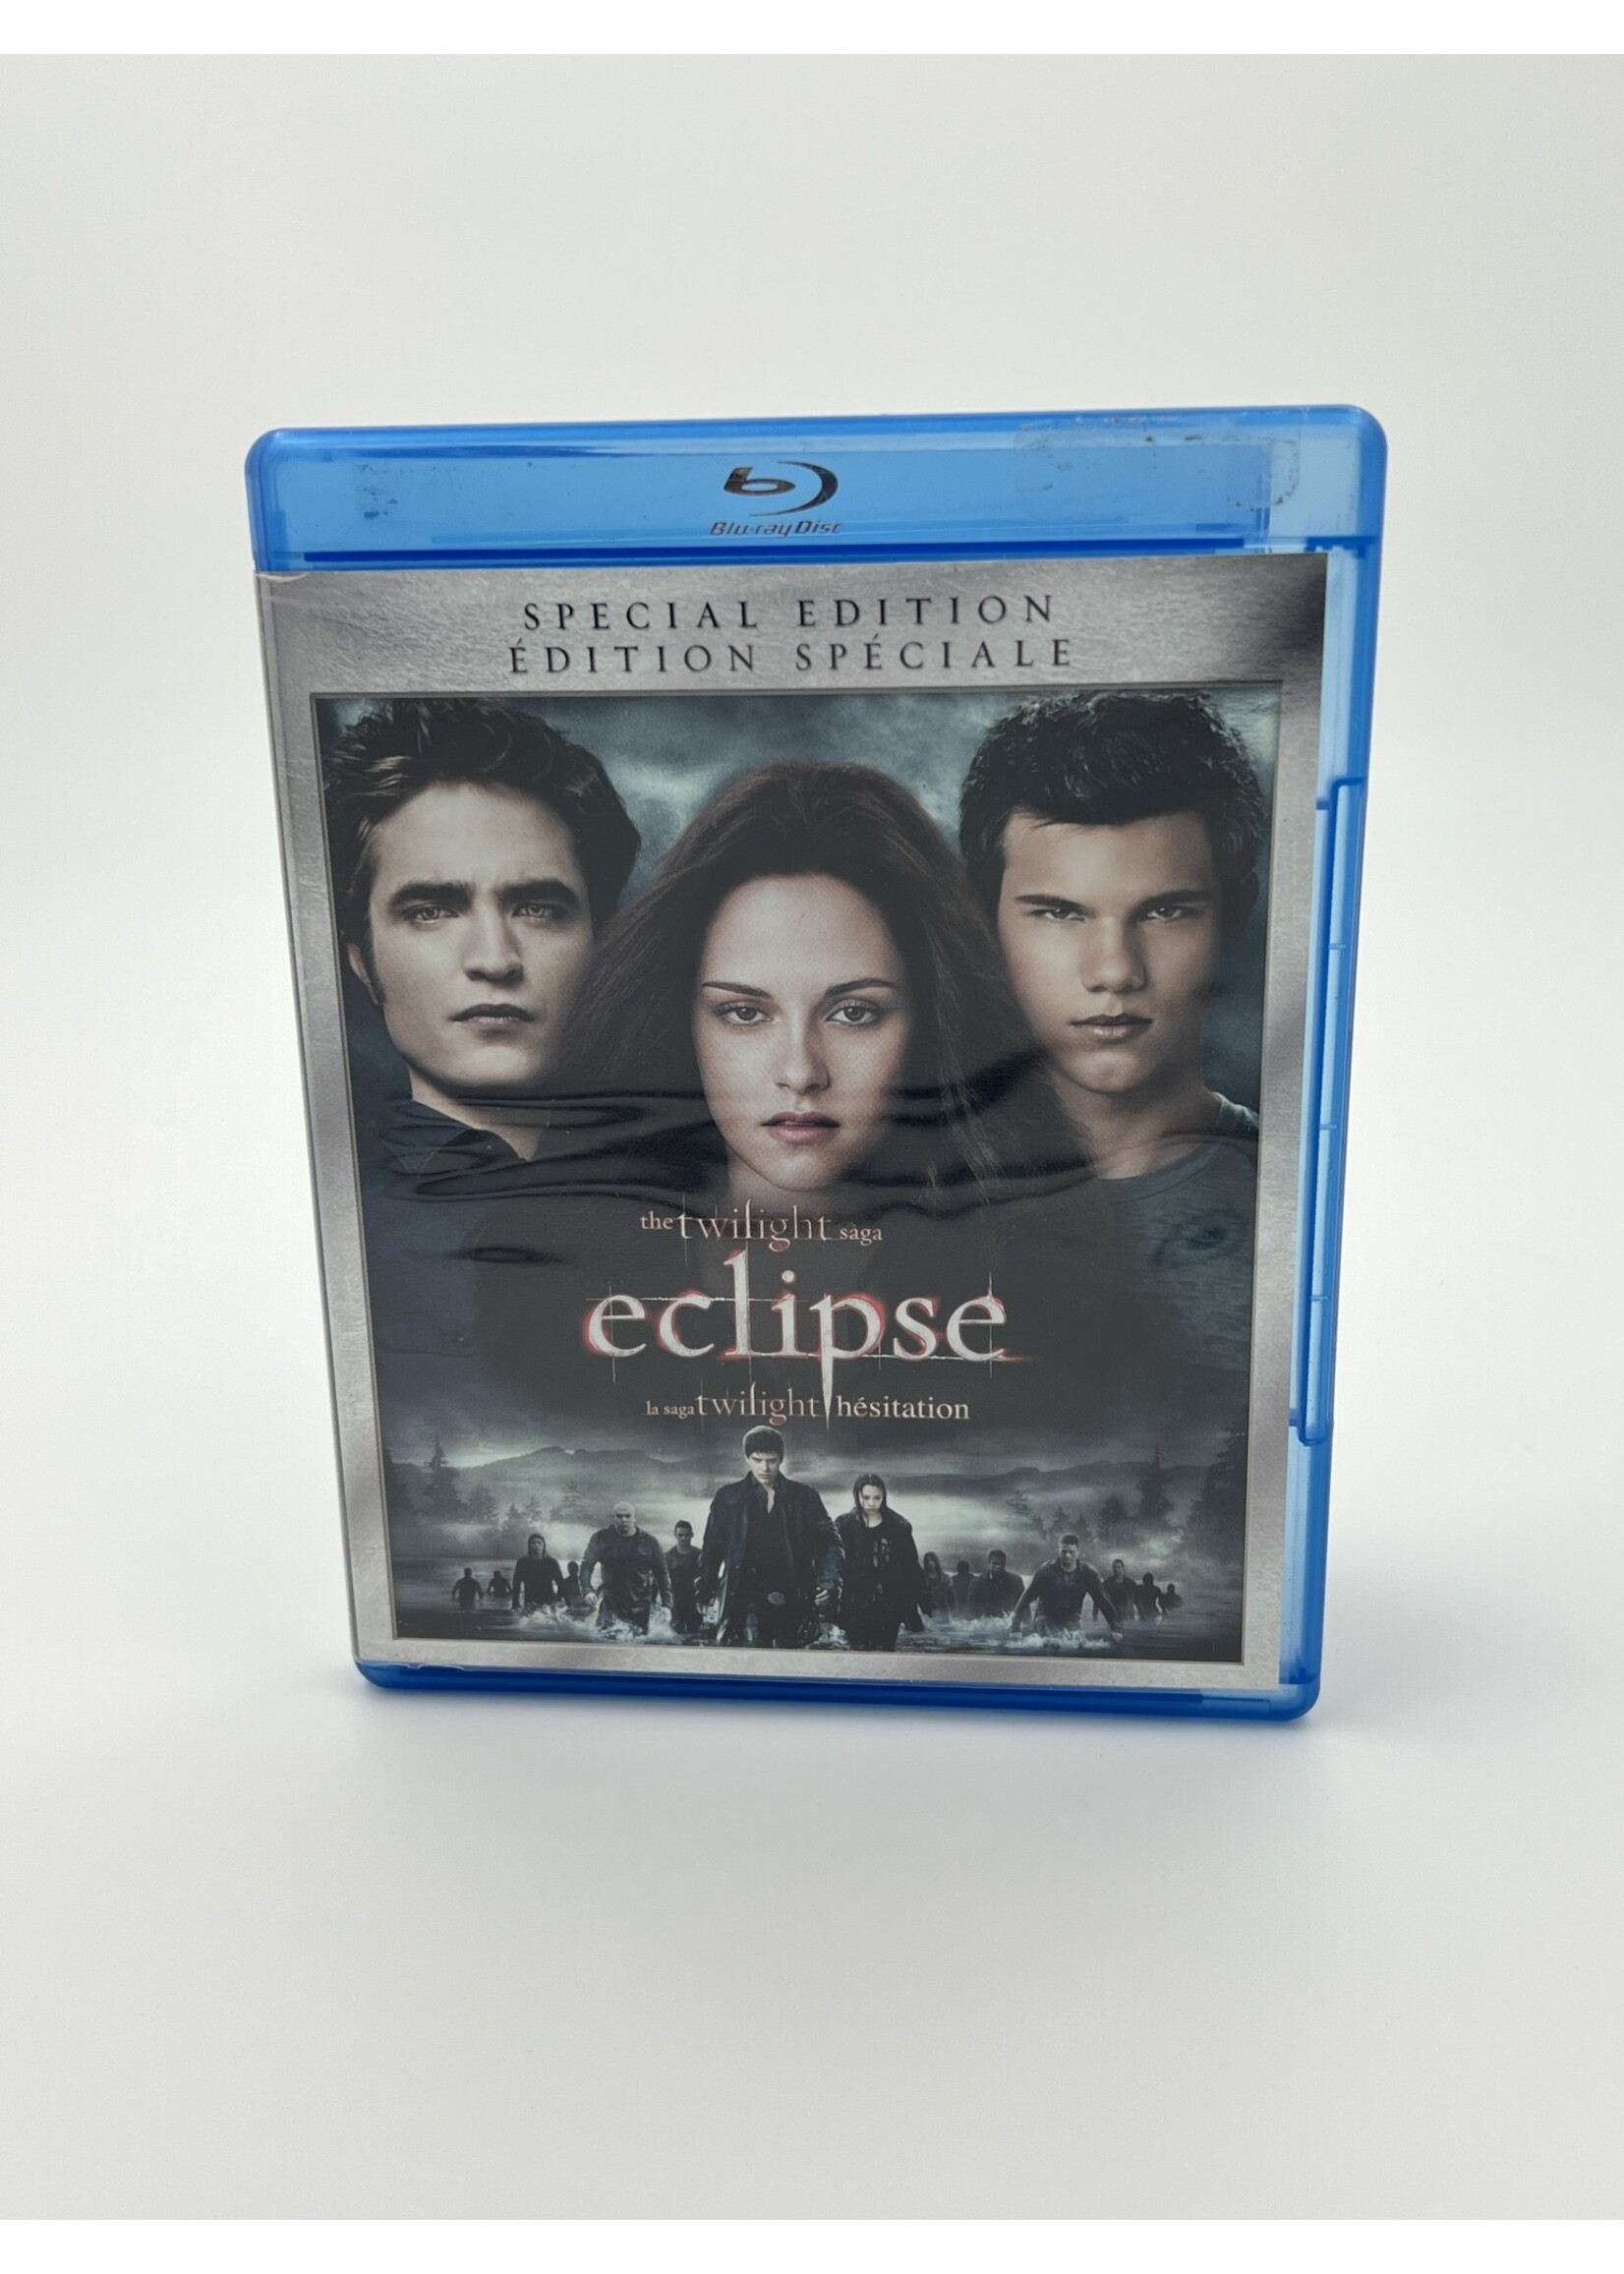 Bluray The Twilight Saga: Eclipse Special Edition Bluray